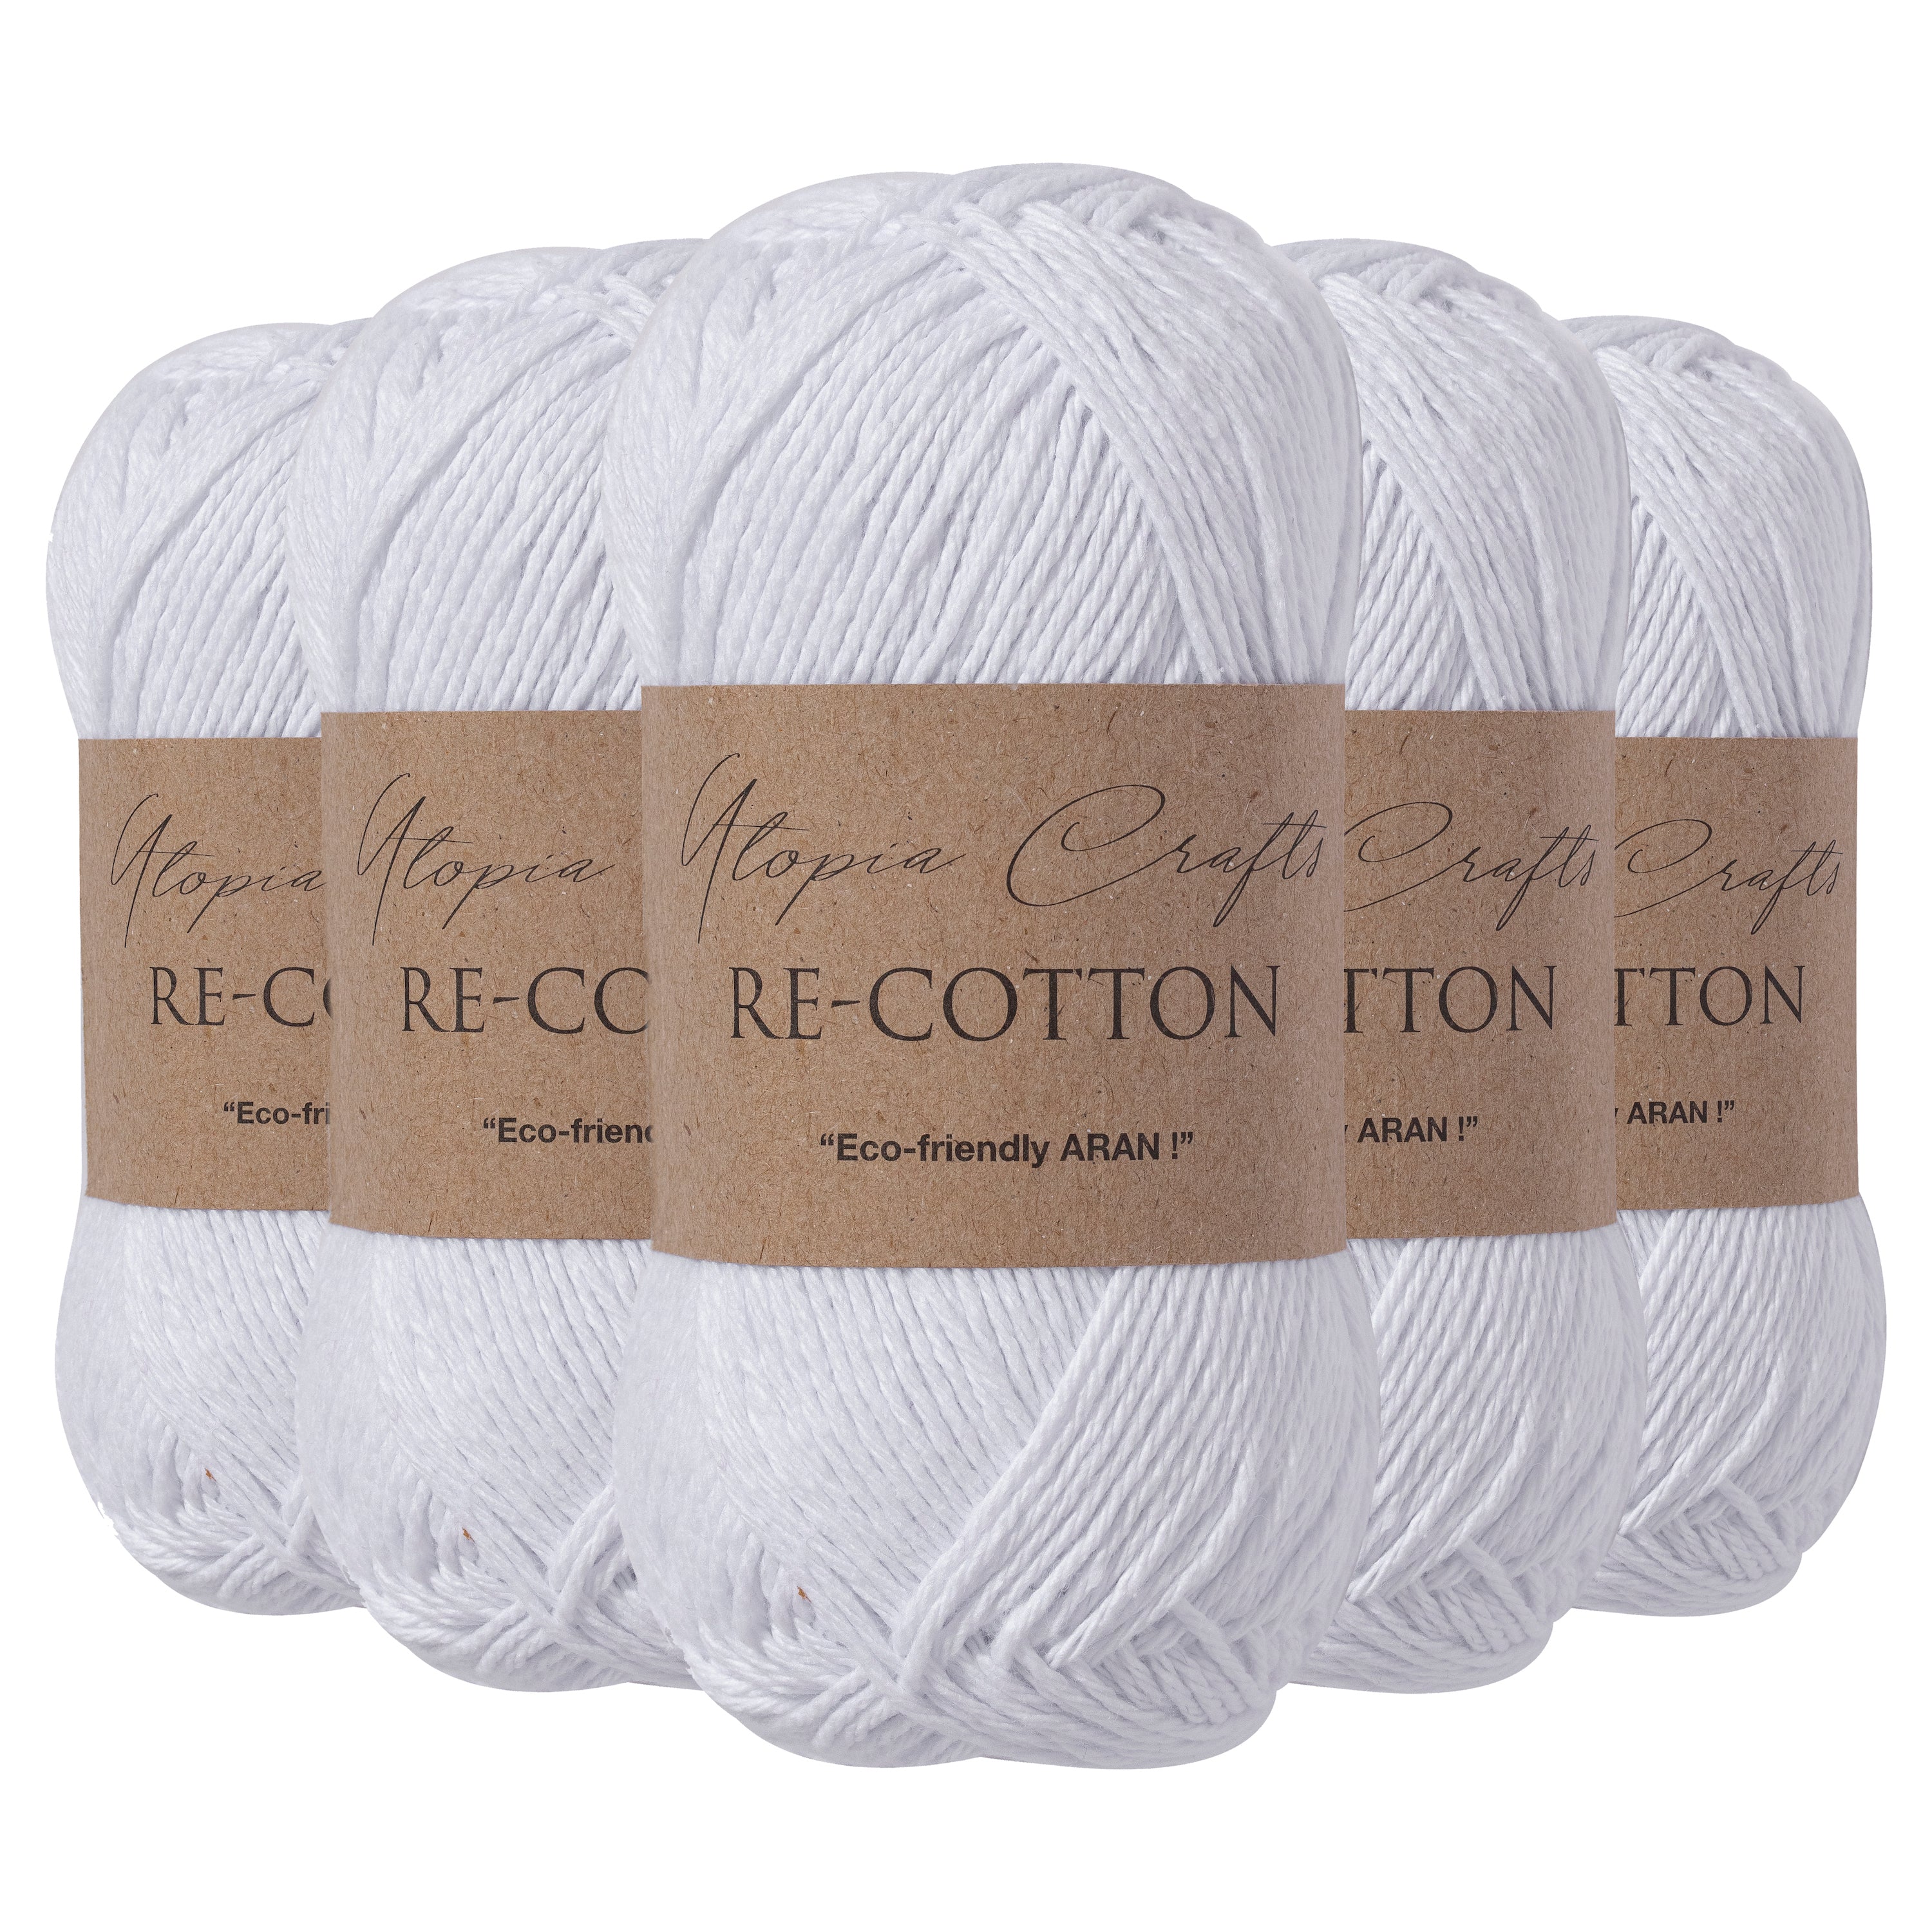 Utopia Crafts Re-Cotton Knitting Yarn, 5x 100g [White]